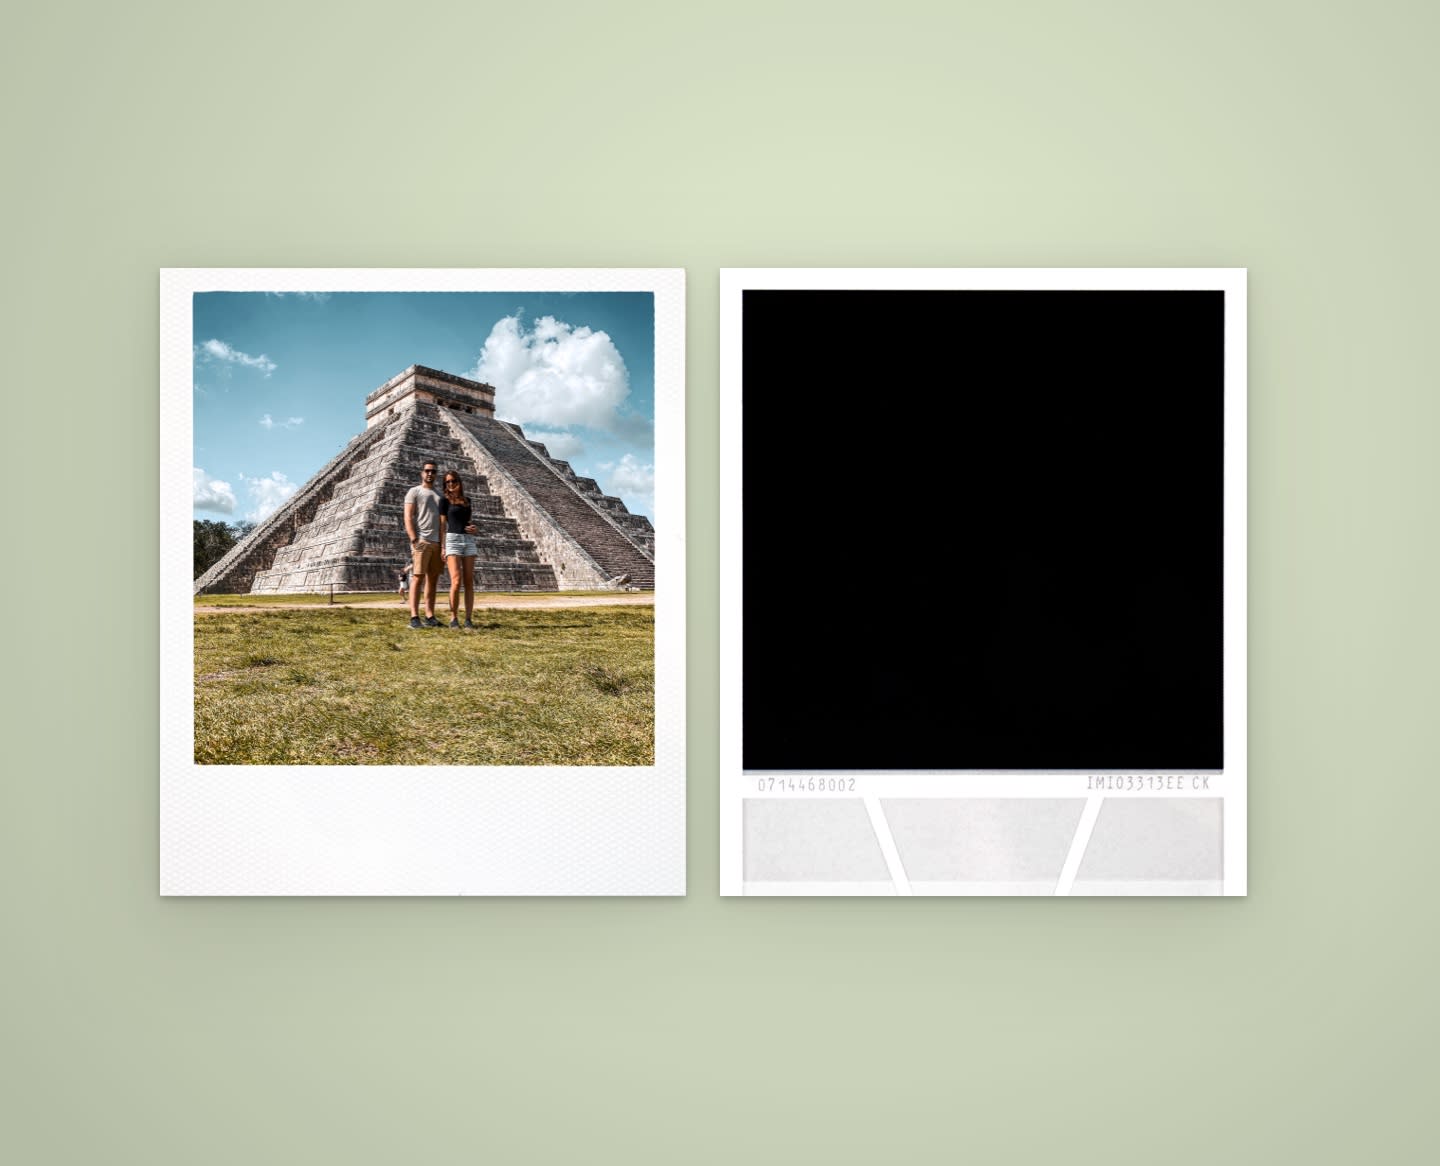 Tirages photos au format Polaroid, Iconique, Impression rétro